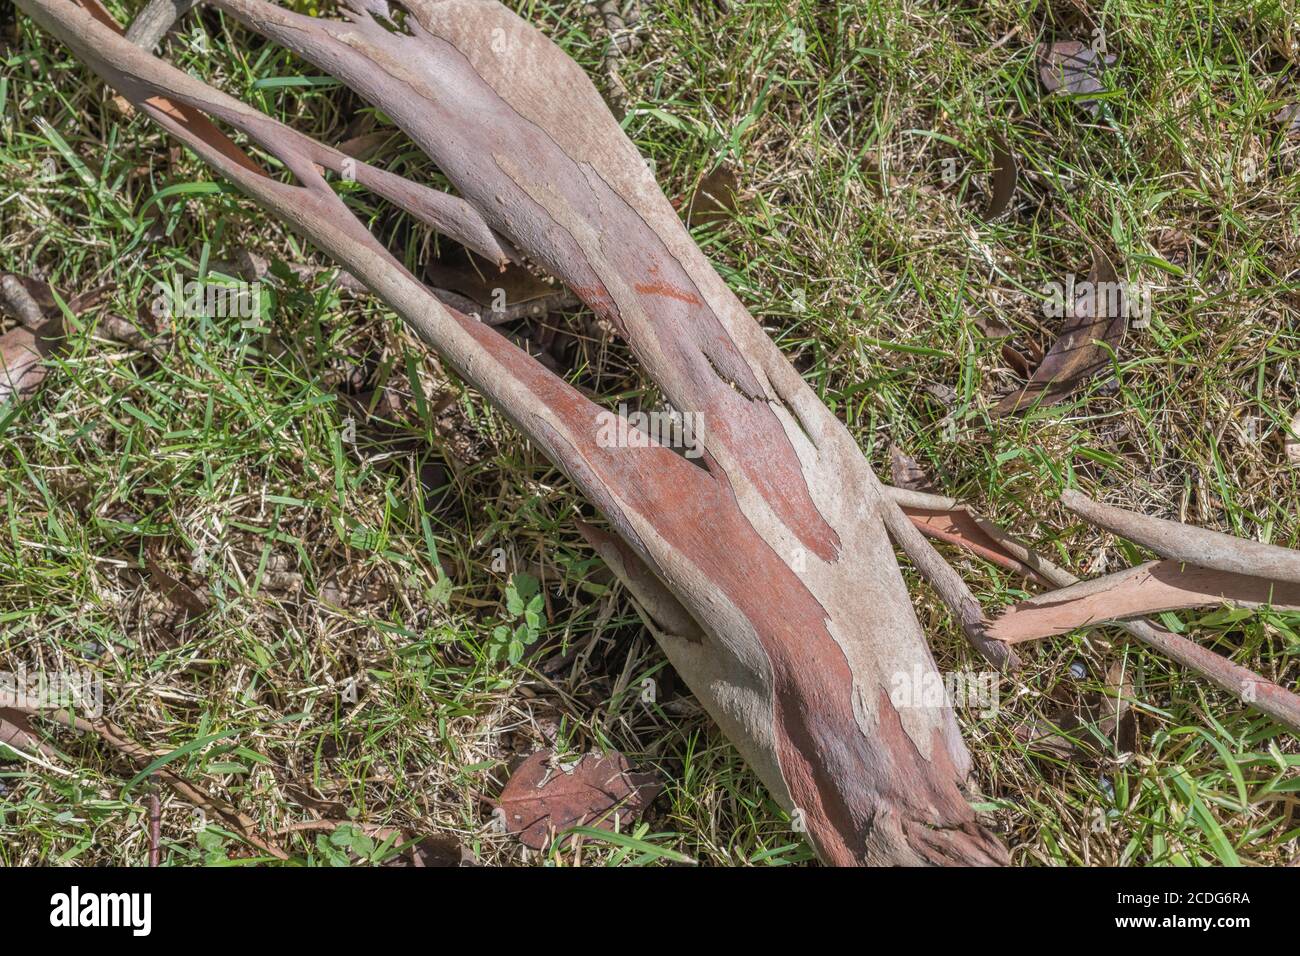 Close shot of the peeled bark of Eucalyptus tree on grass. Possibly Eucalyptus gunnii / Cider Gum, but may be E. niphophila or E. urnigera. Medicinal. Stock Photo